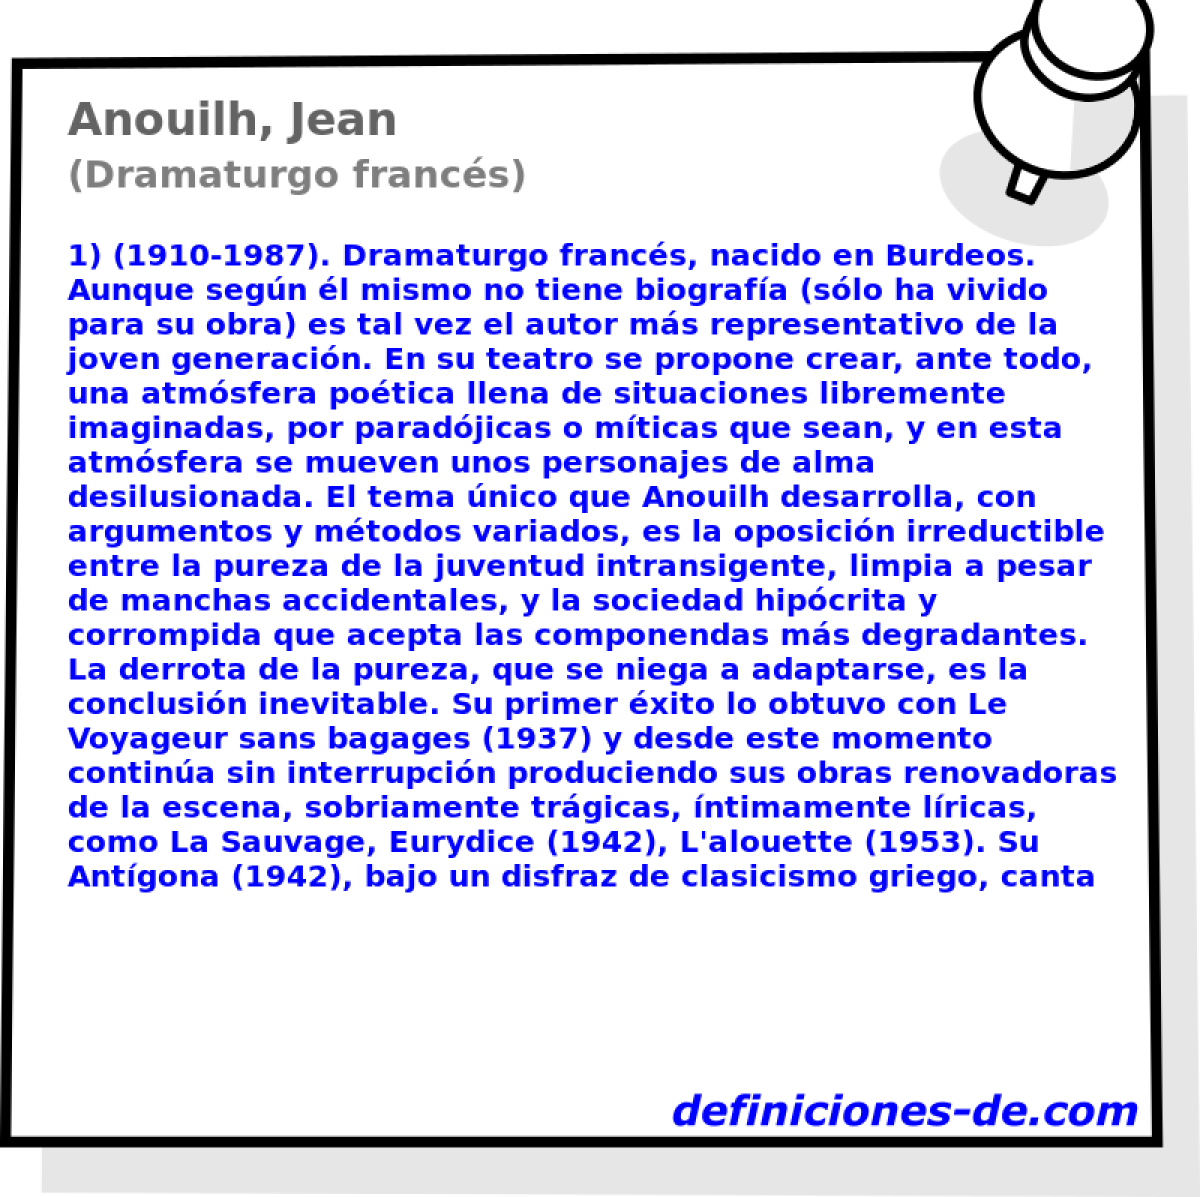 Anouilh, Jean (Dramaturgo francs)